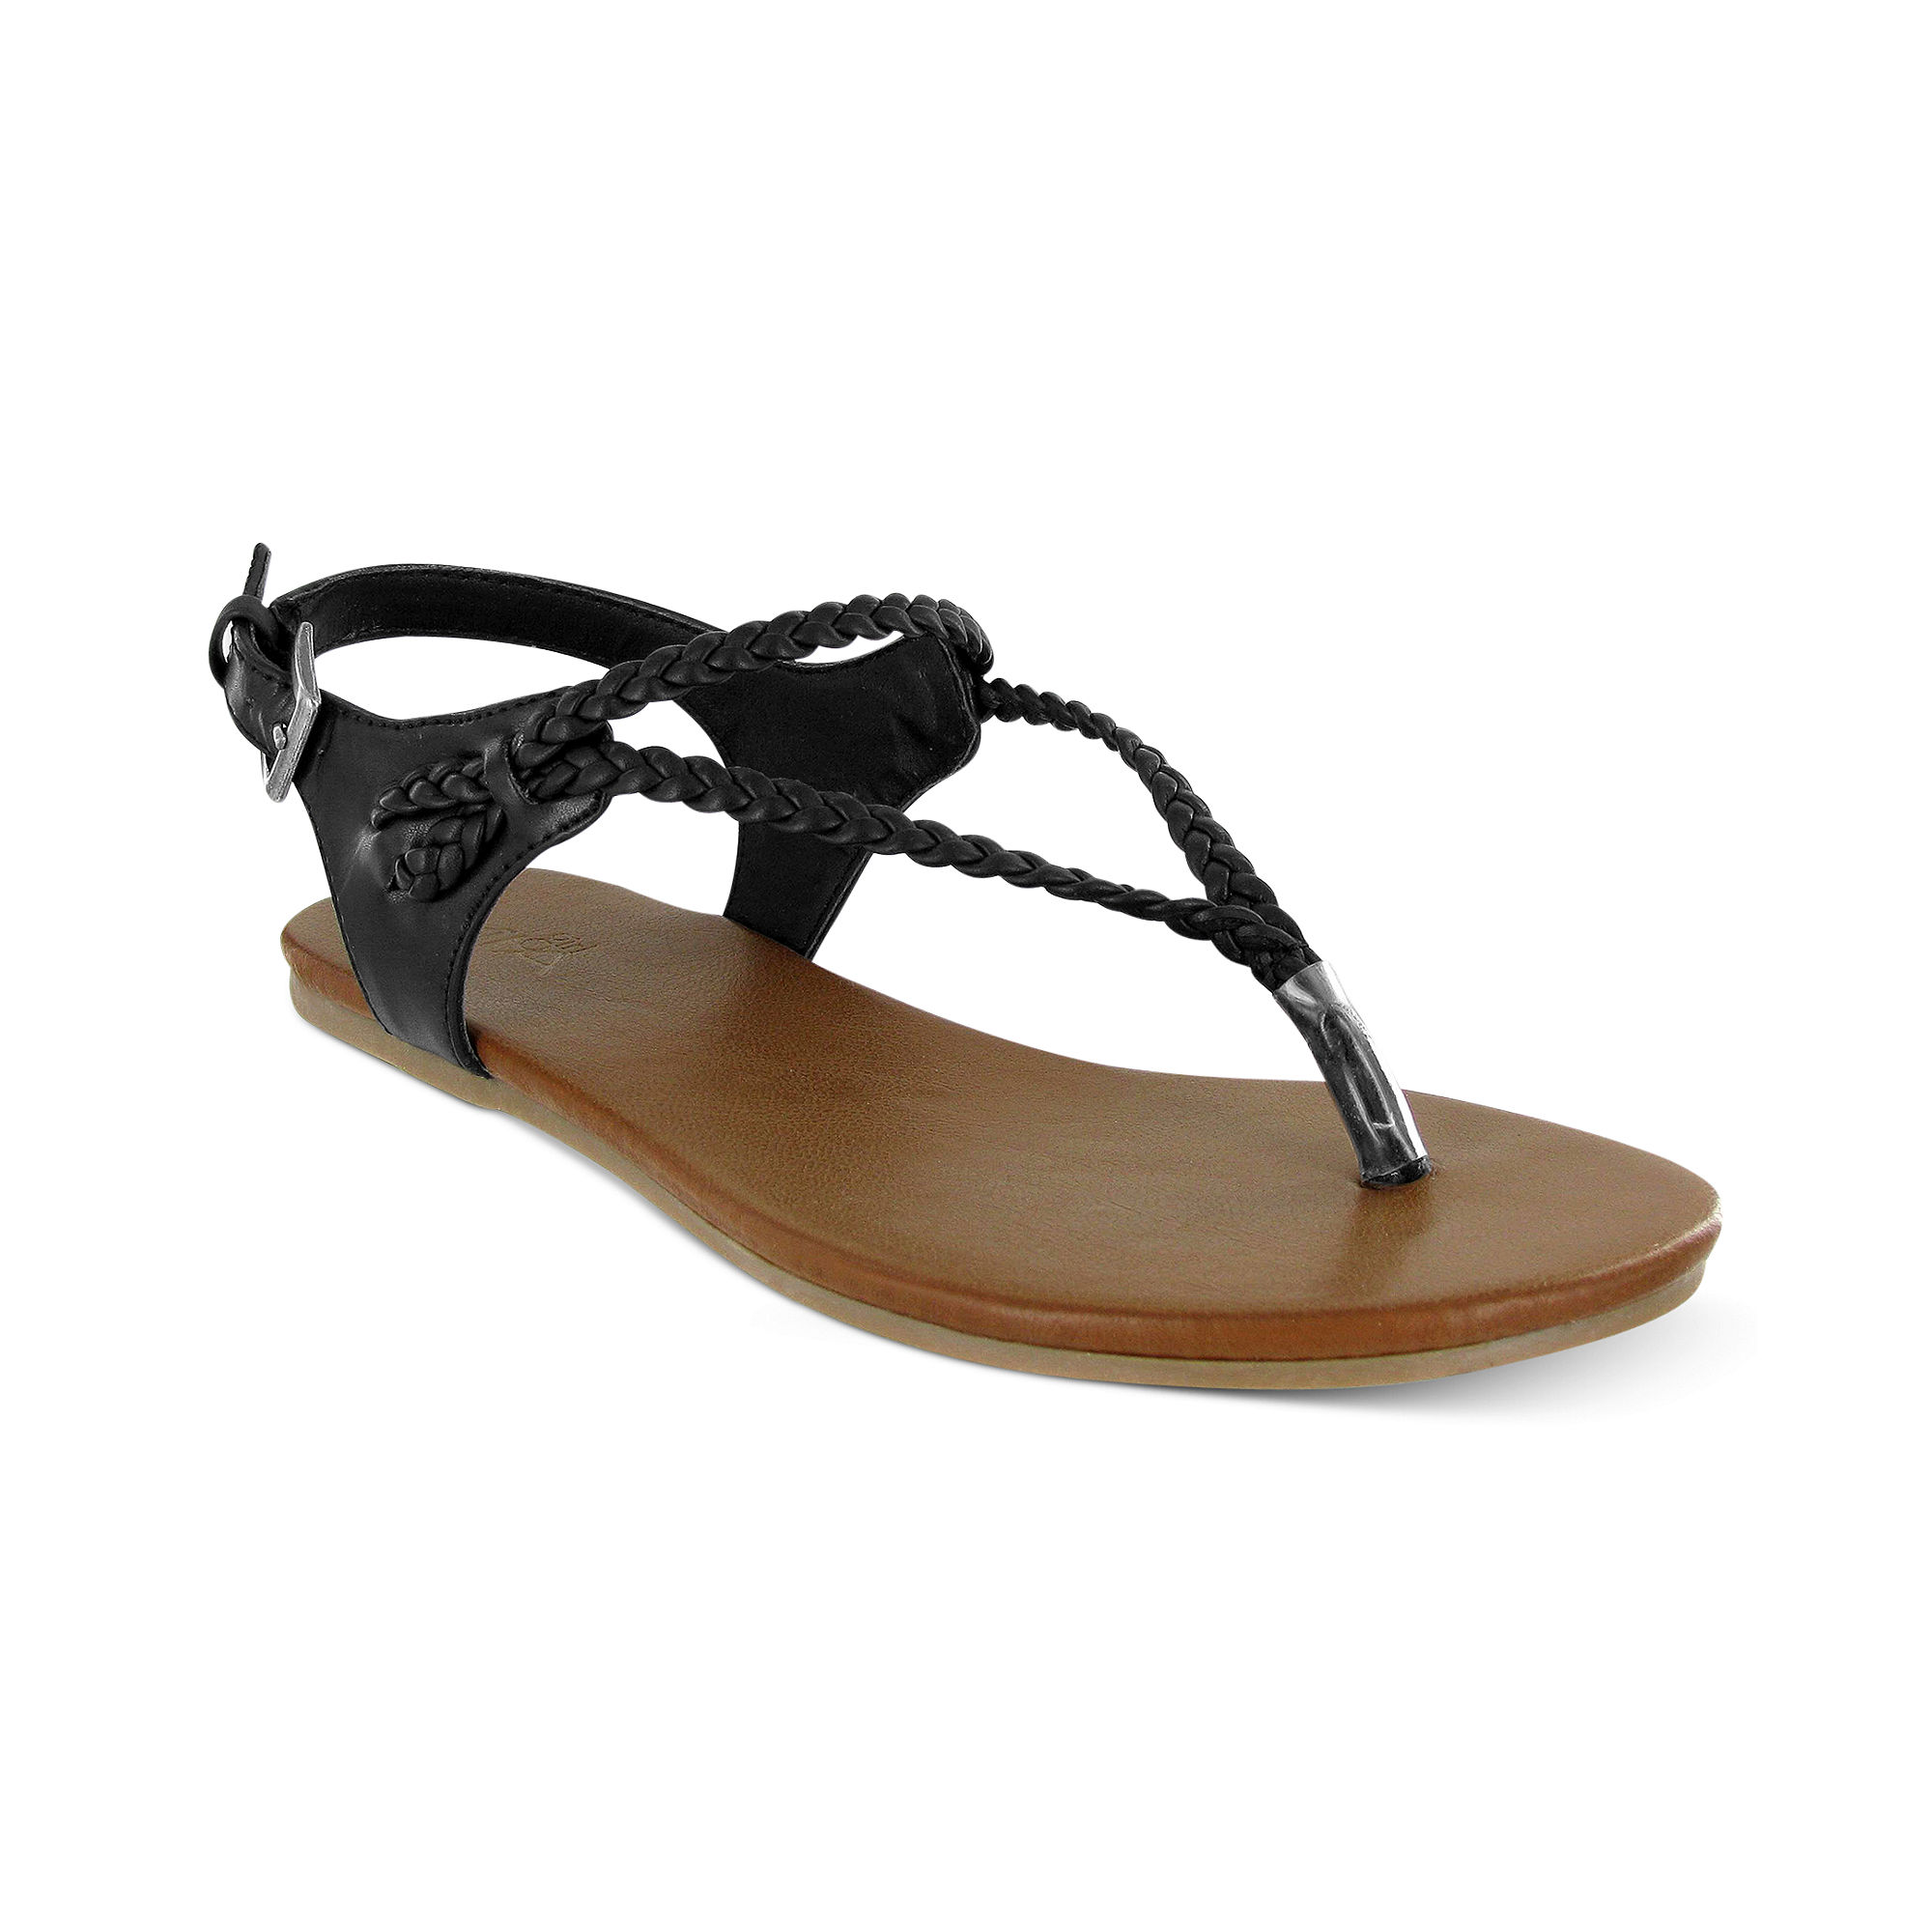 Lyst - Mia Joi Braided Flat Thong Sandals in Black